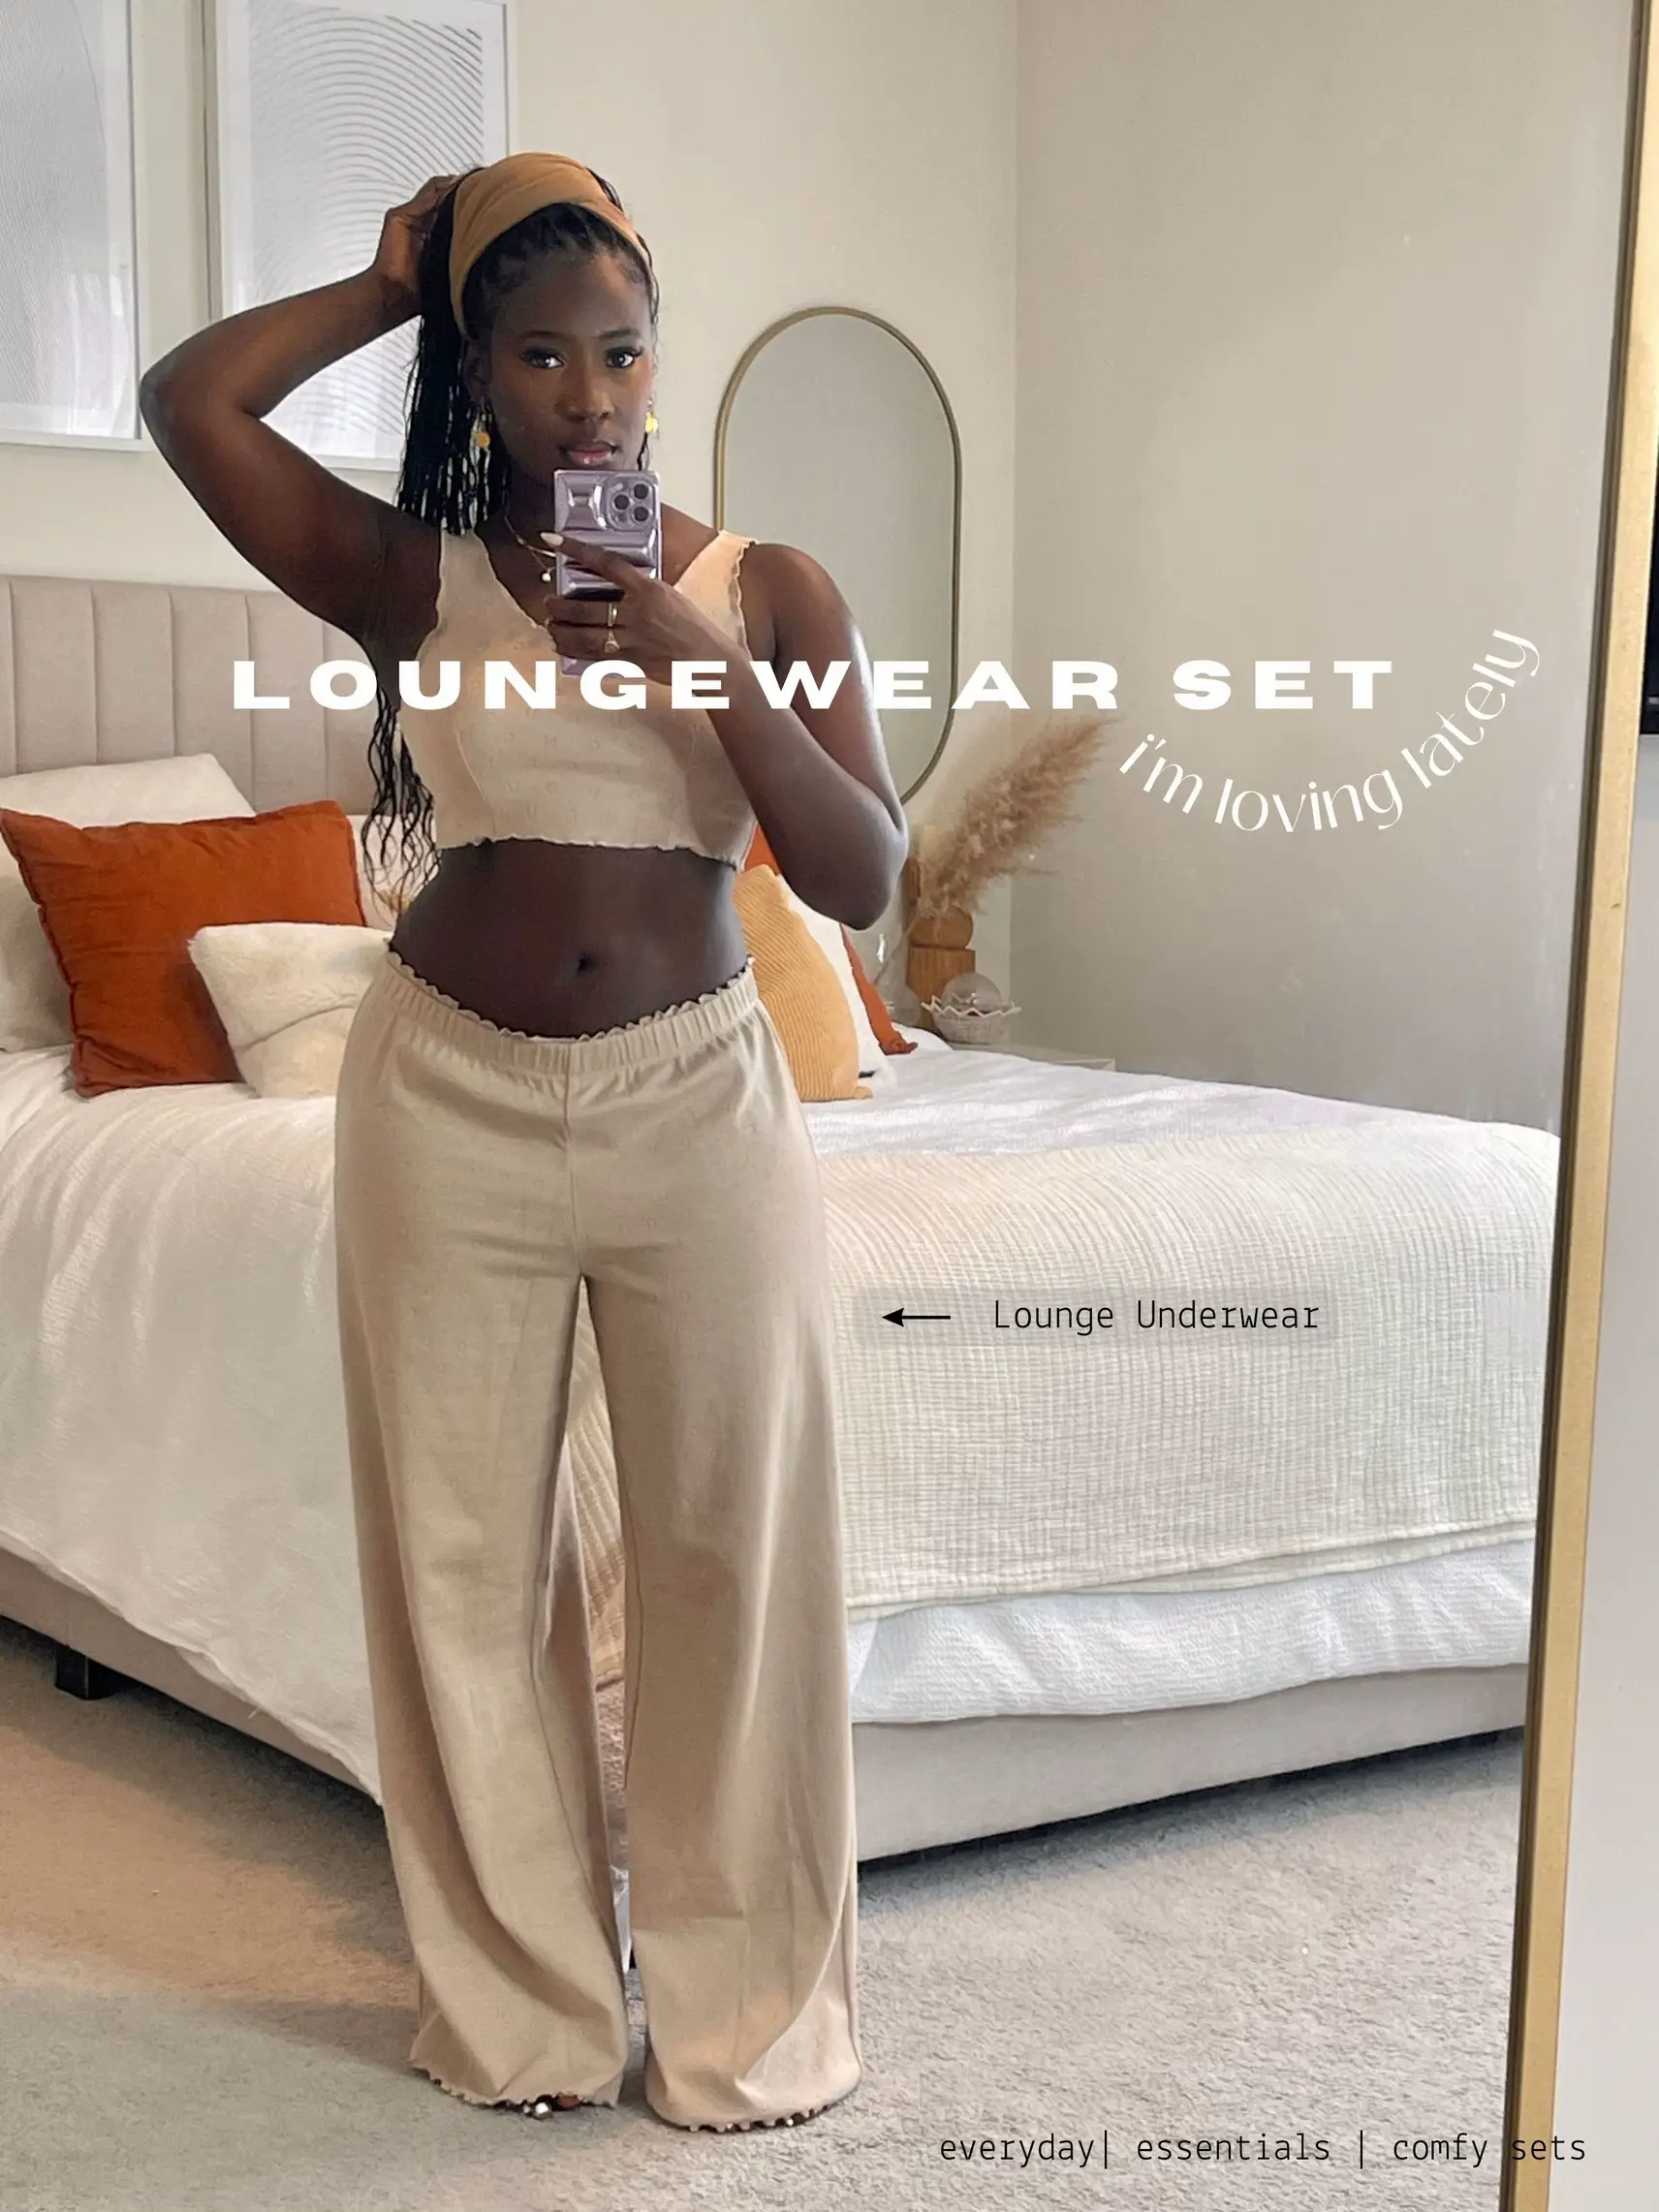 Lounge Underwear - Fresh White Vibe ✨ Shop: www.loungeunderwear